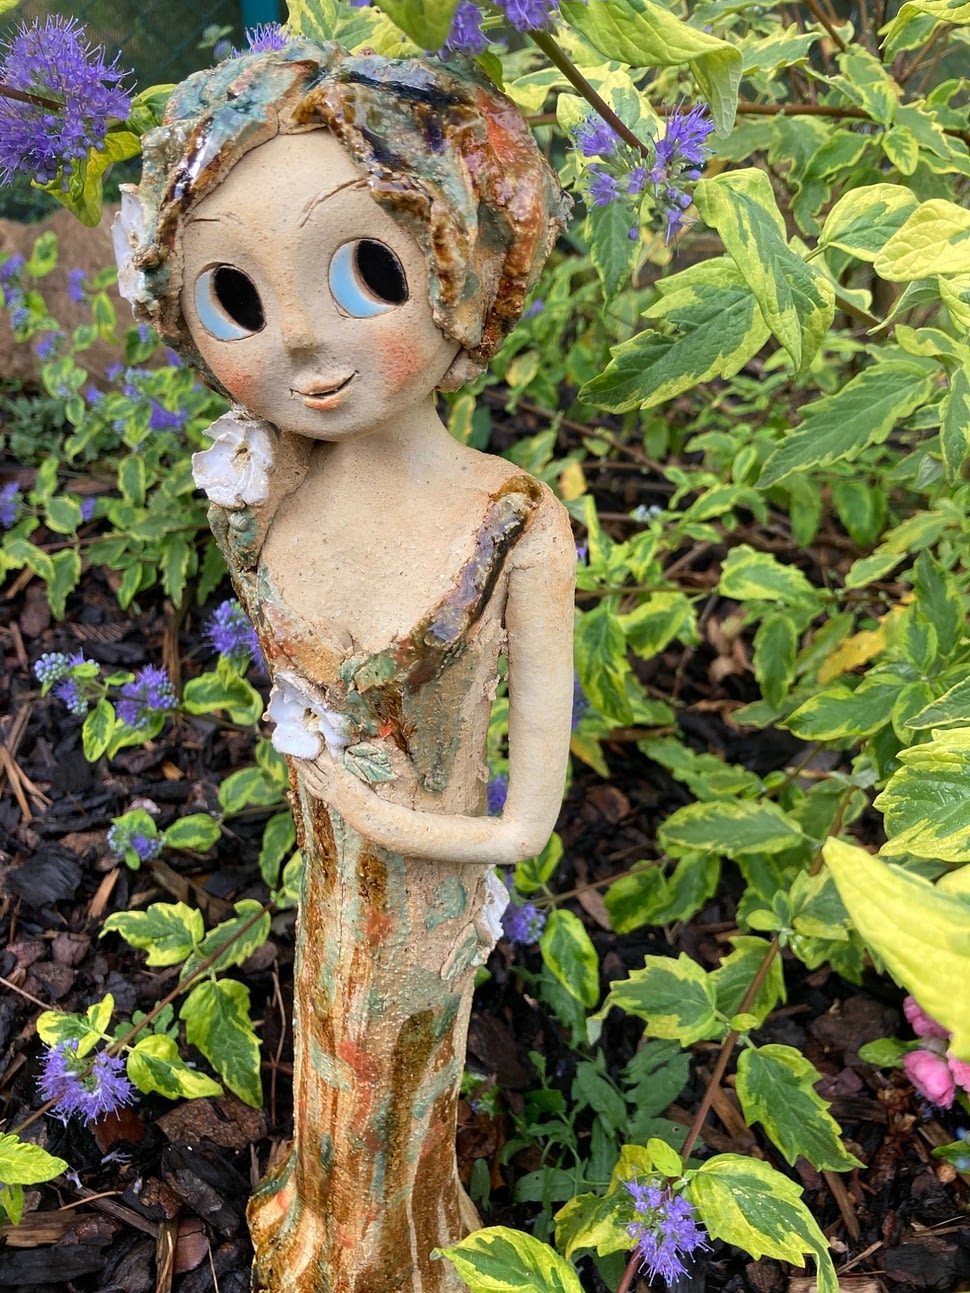 víla socha dekorace do zahrady keramika figura keramikaandee květiny